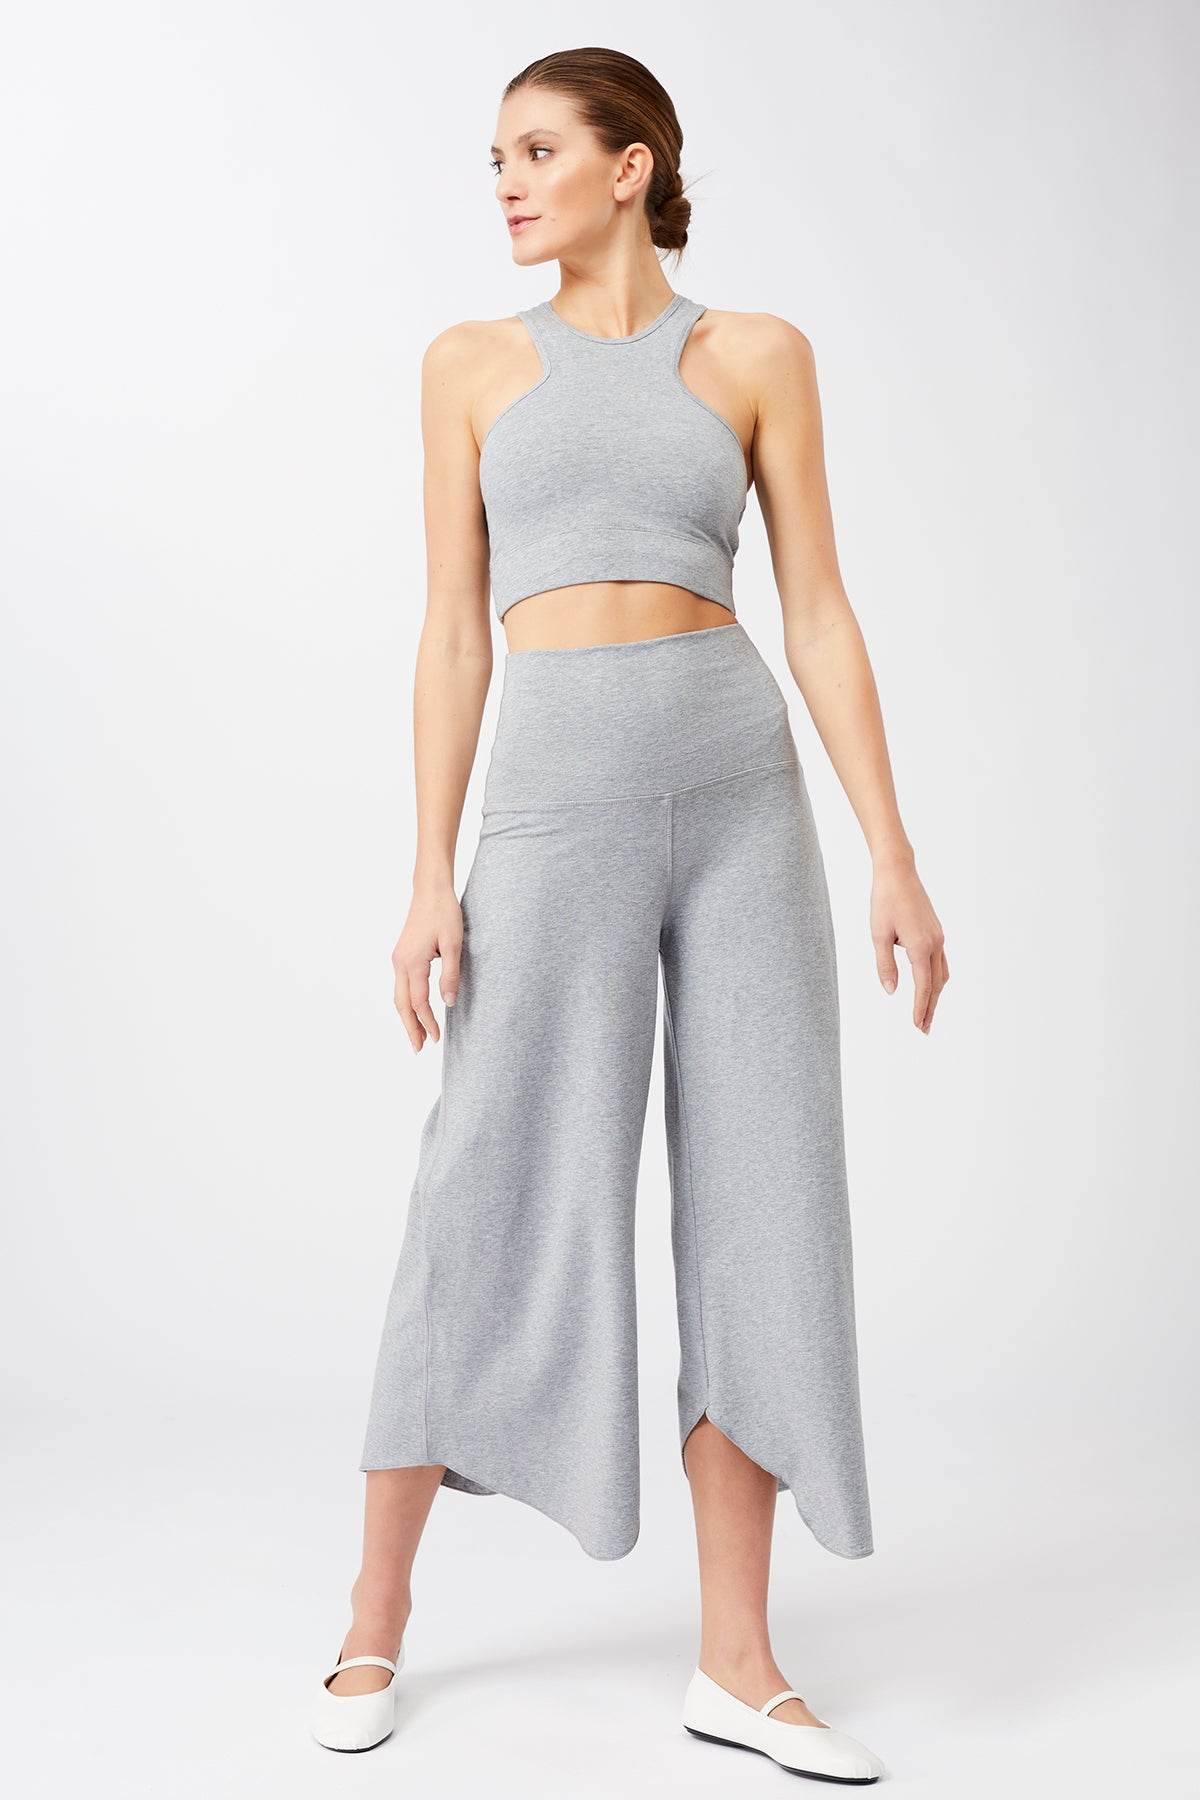 Mandala Yoga Pant Grau Outfit Front - Roll Over Tulip Pants